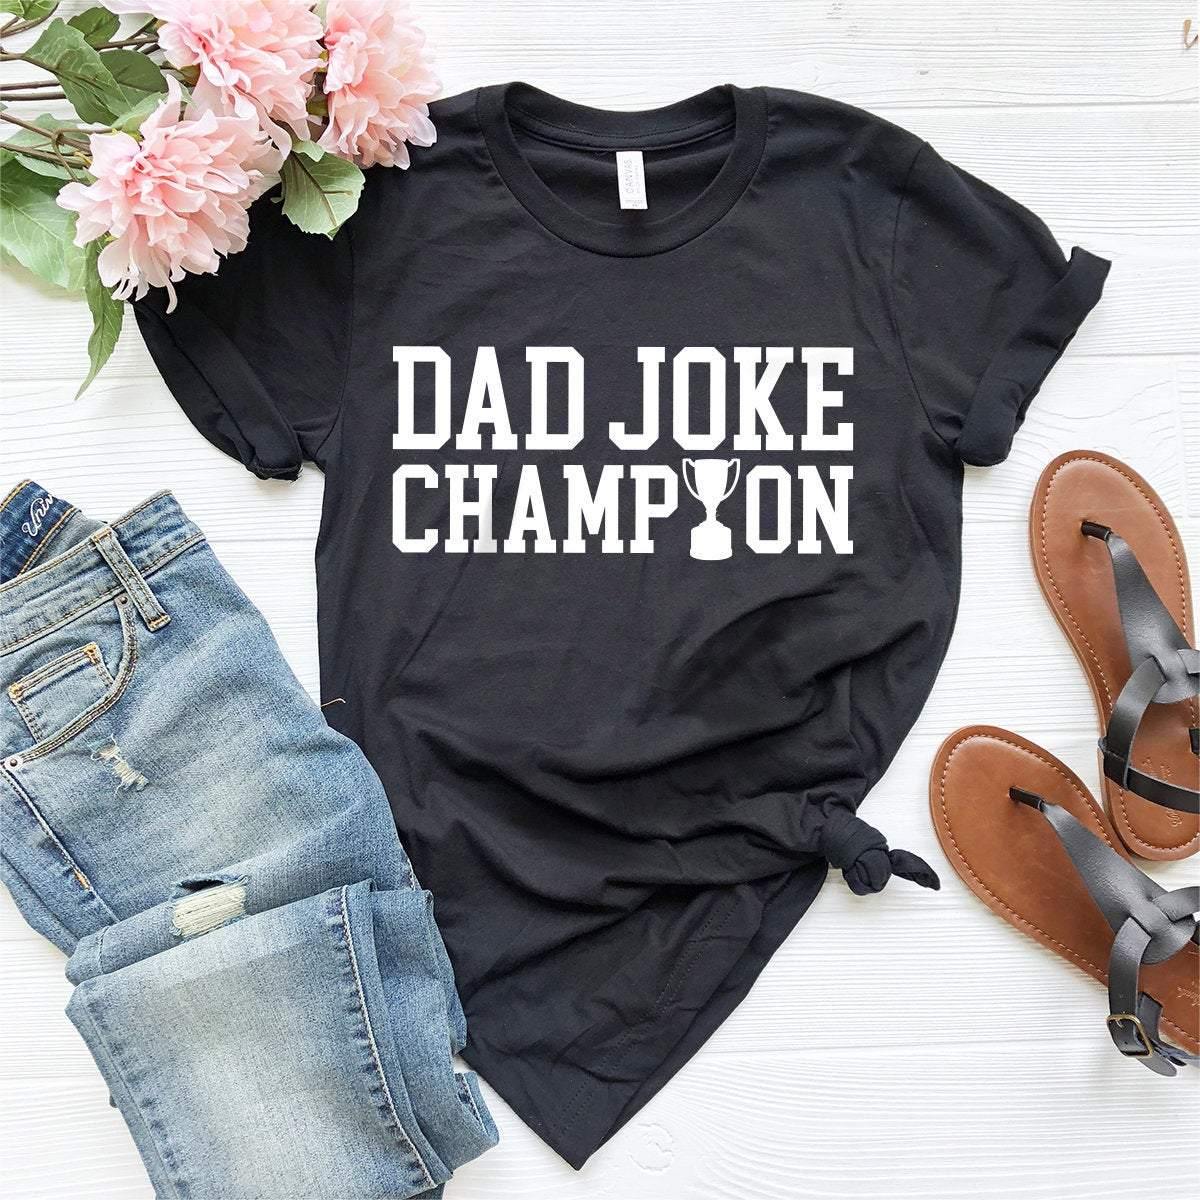 Dad Shirt, Dad Joke Champion Shirt, Dad Birthday Gift, Funny Dad Shirt, Gift For Dad, Dad Gift, Dad T-Shirt, Daddy Shirt, Father's Day Gift - Fastdeliverytees.com